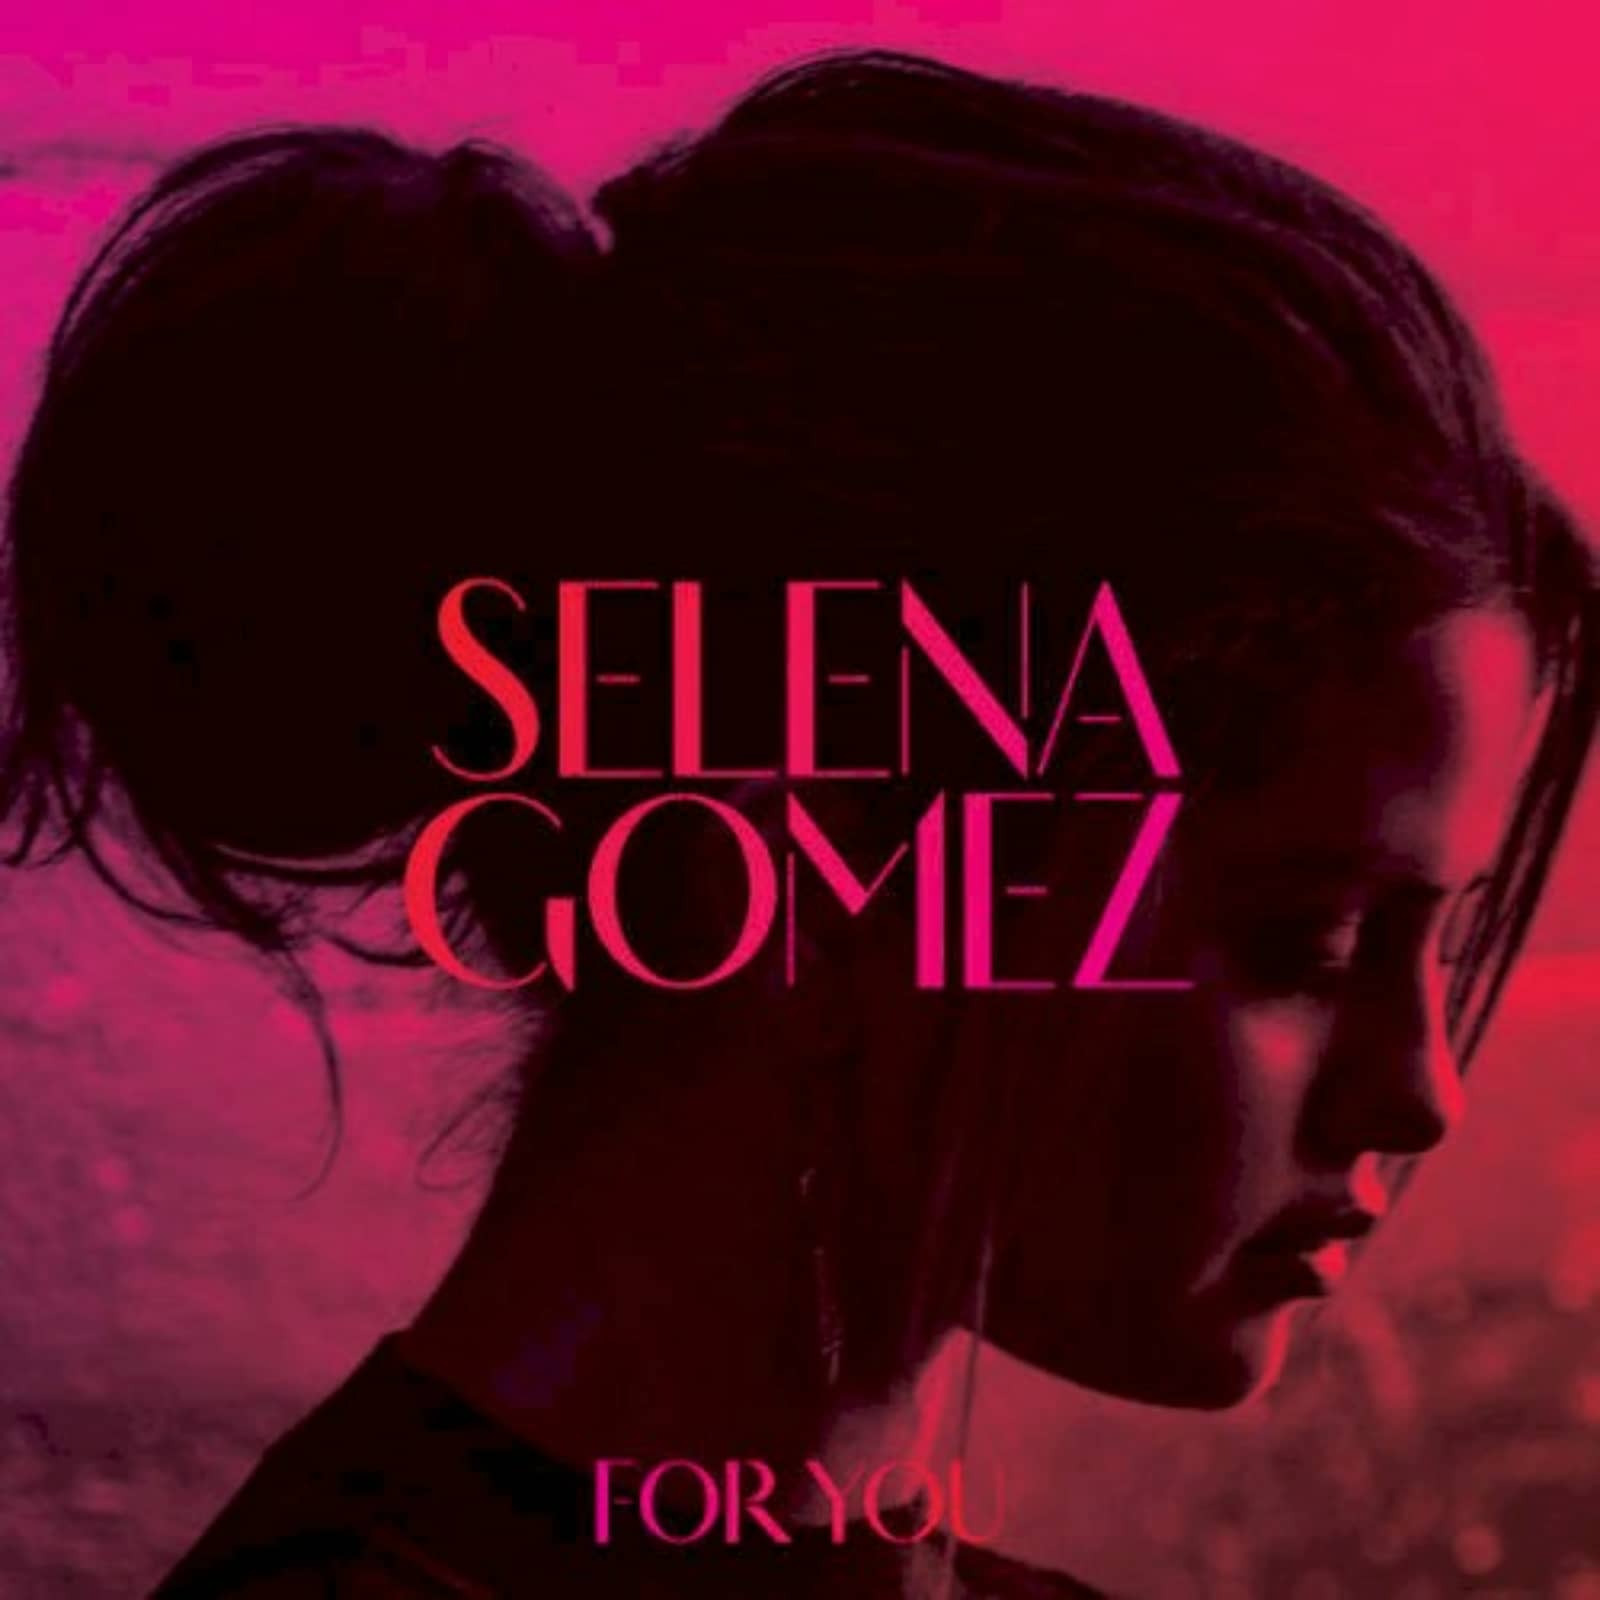 Tune: Selena Gomez & The Scene - Round & Round 